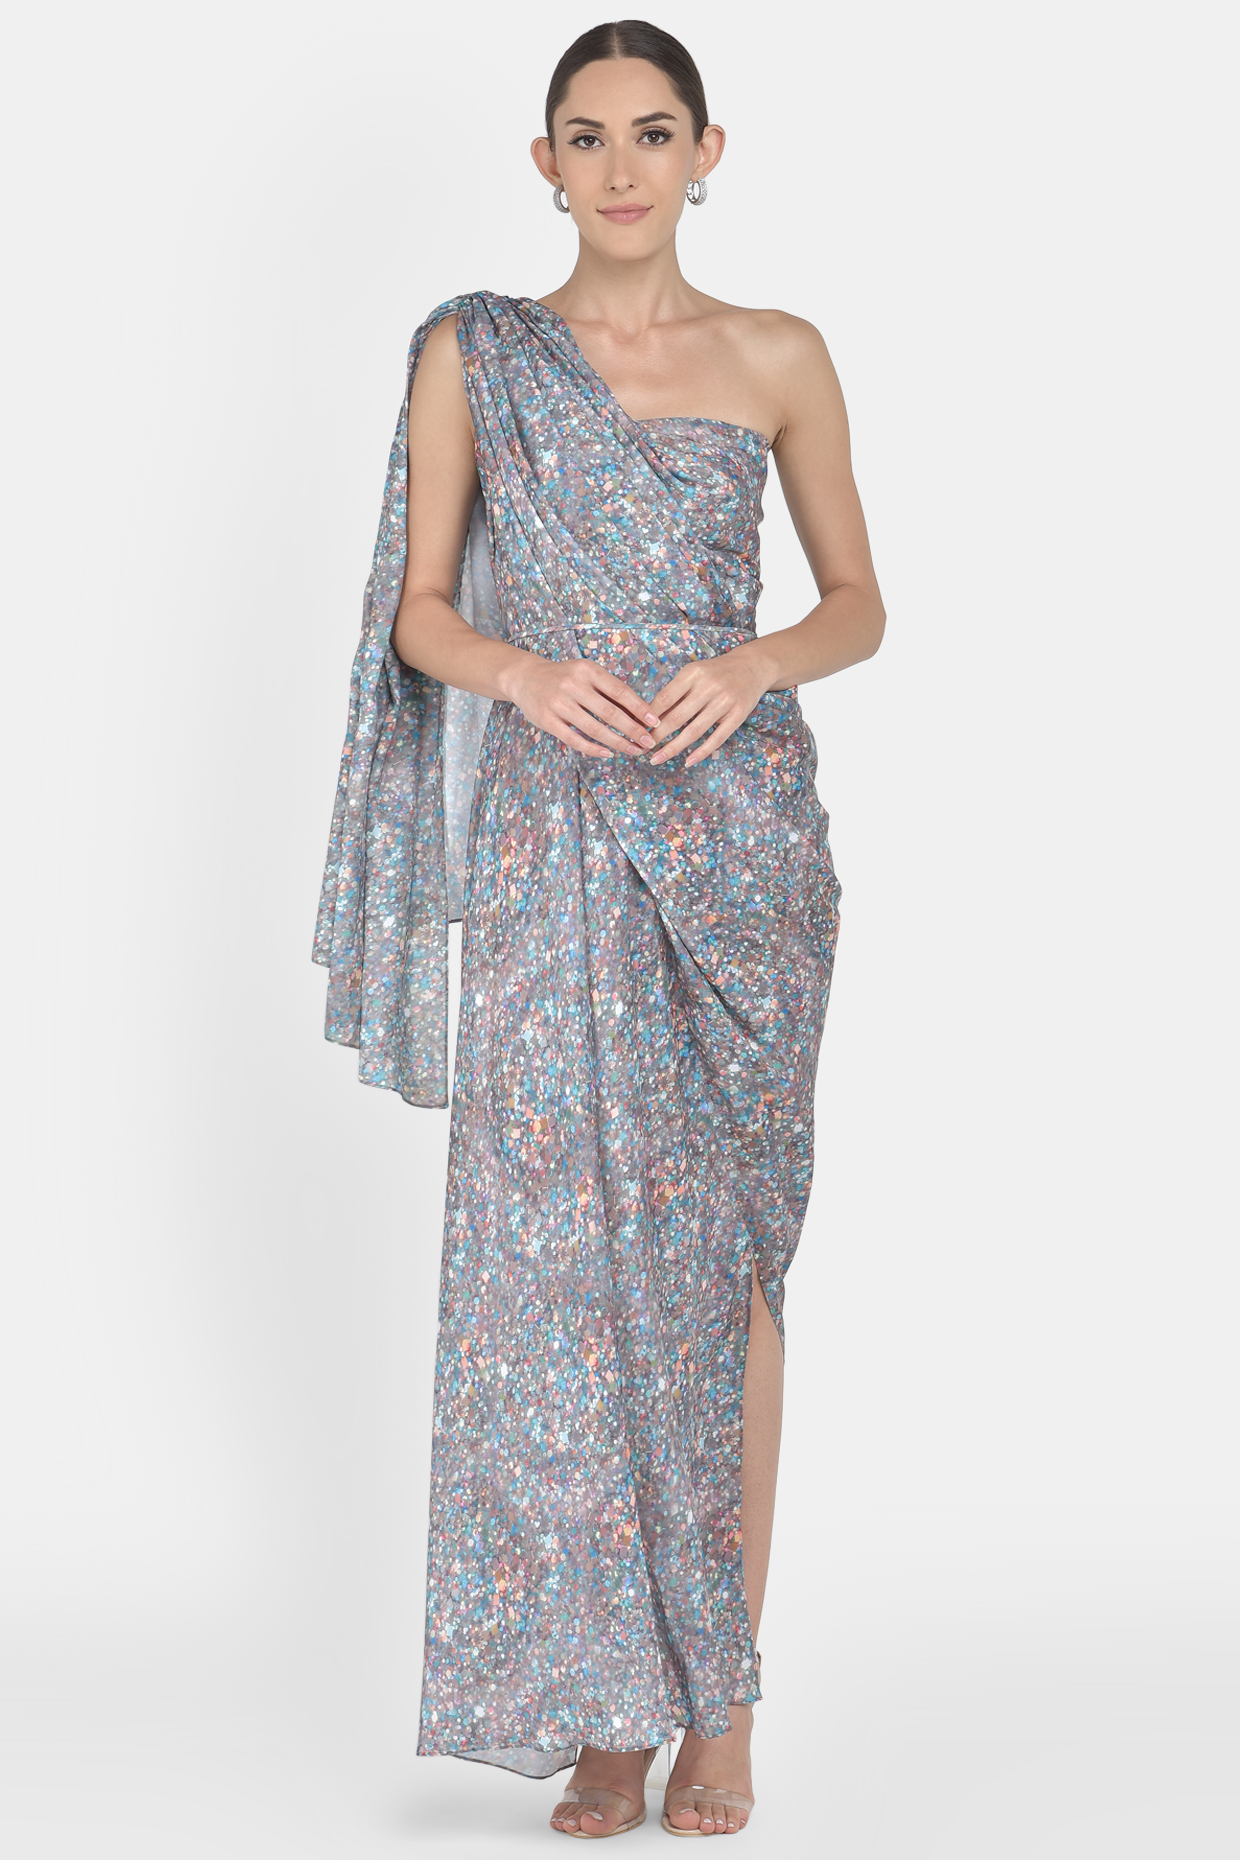 Grey Digital Print Drape Gown